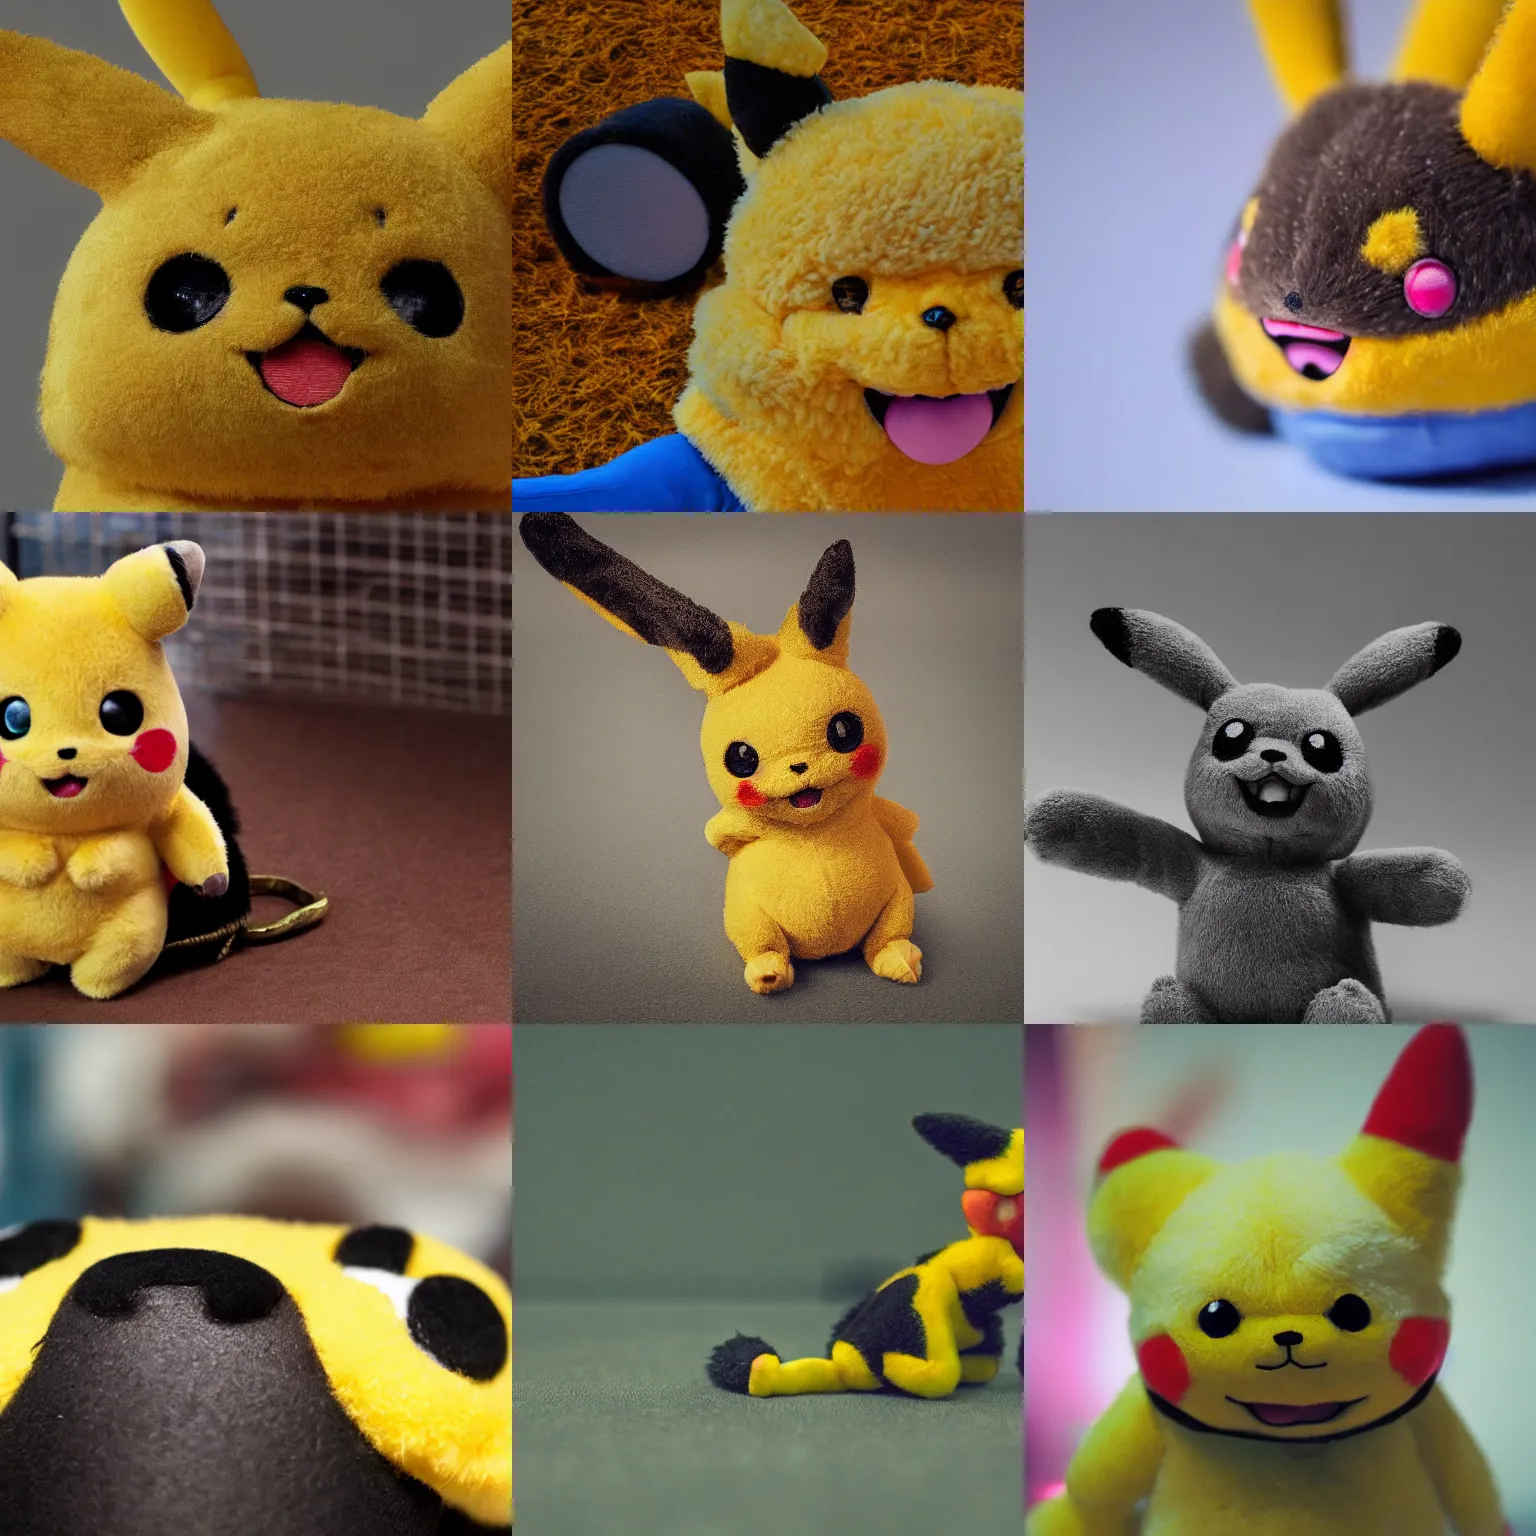 Prompt: A close up macro shot of a furry toy Pikachu Pikachu Pikachu, hyper realistic